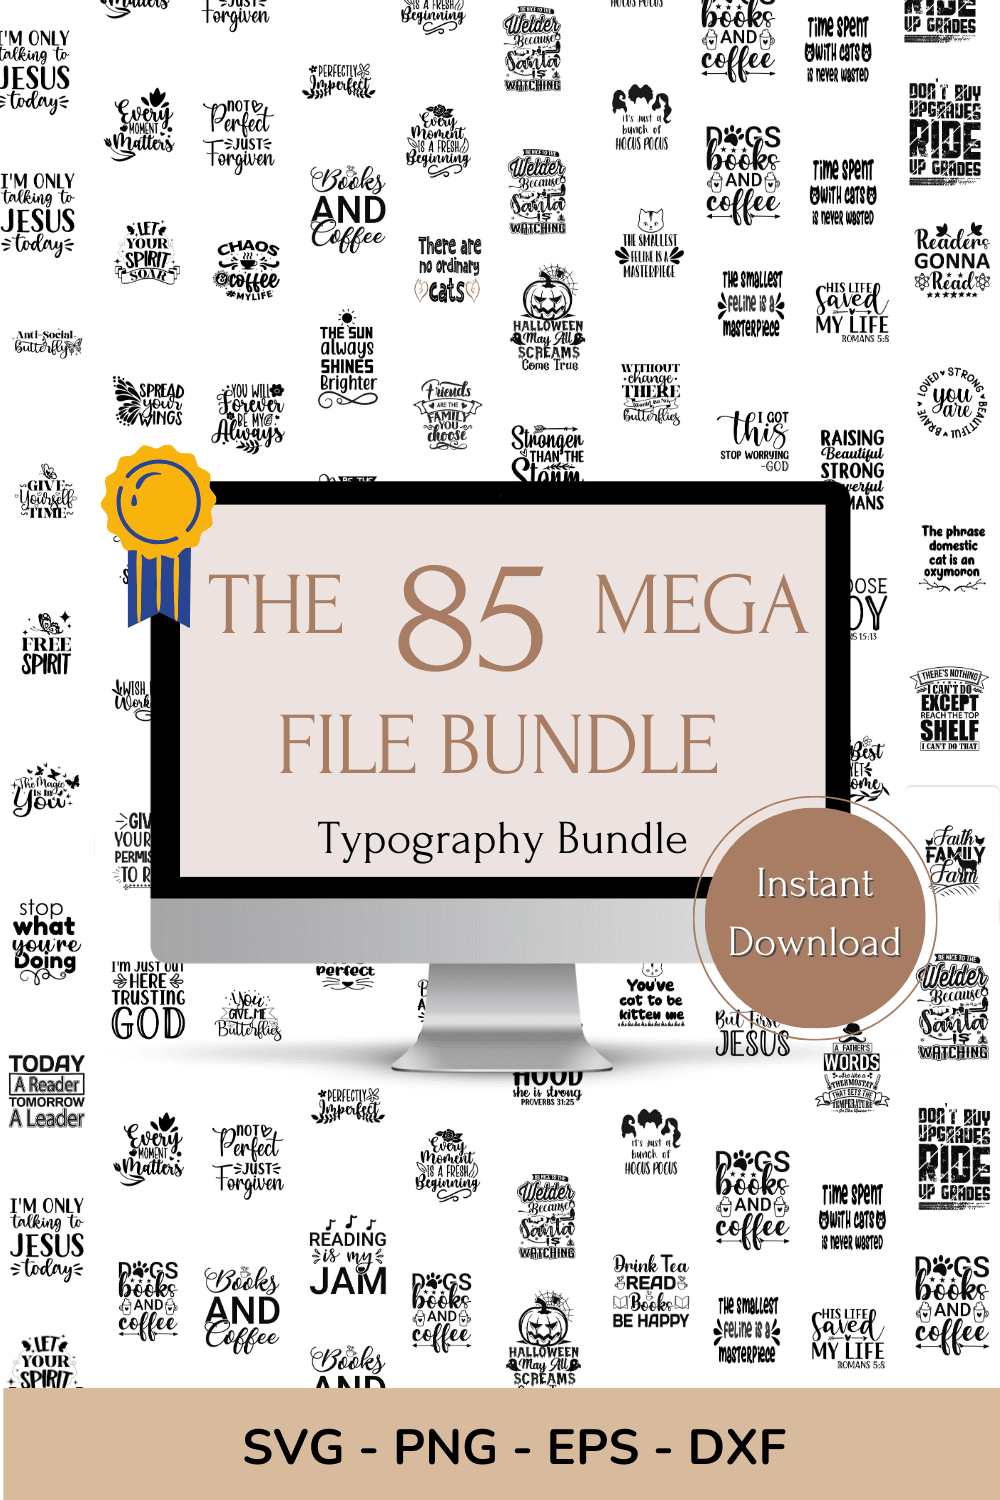 85 Mega file bundle's (Typography) pinterest preview image.